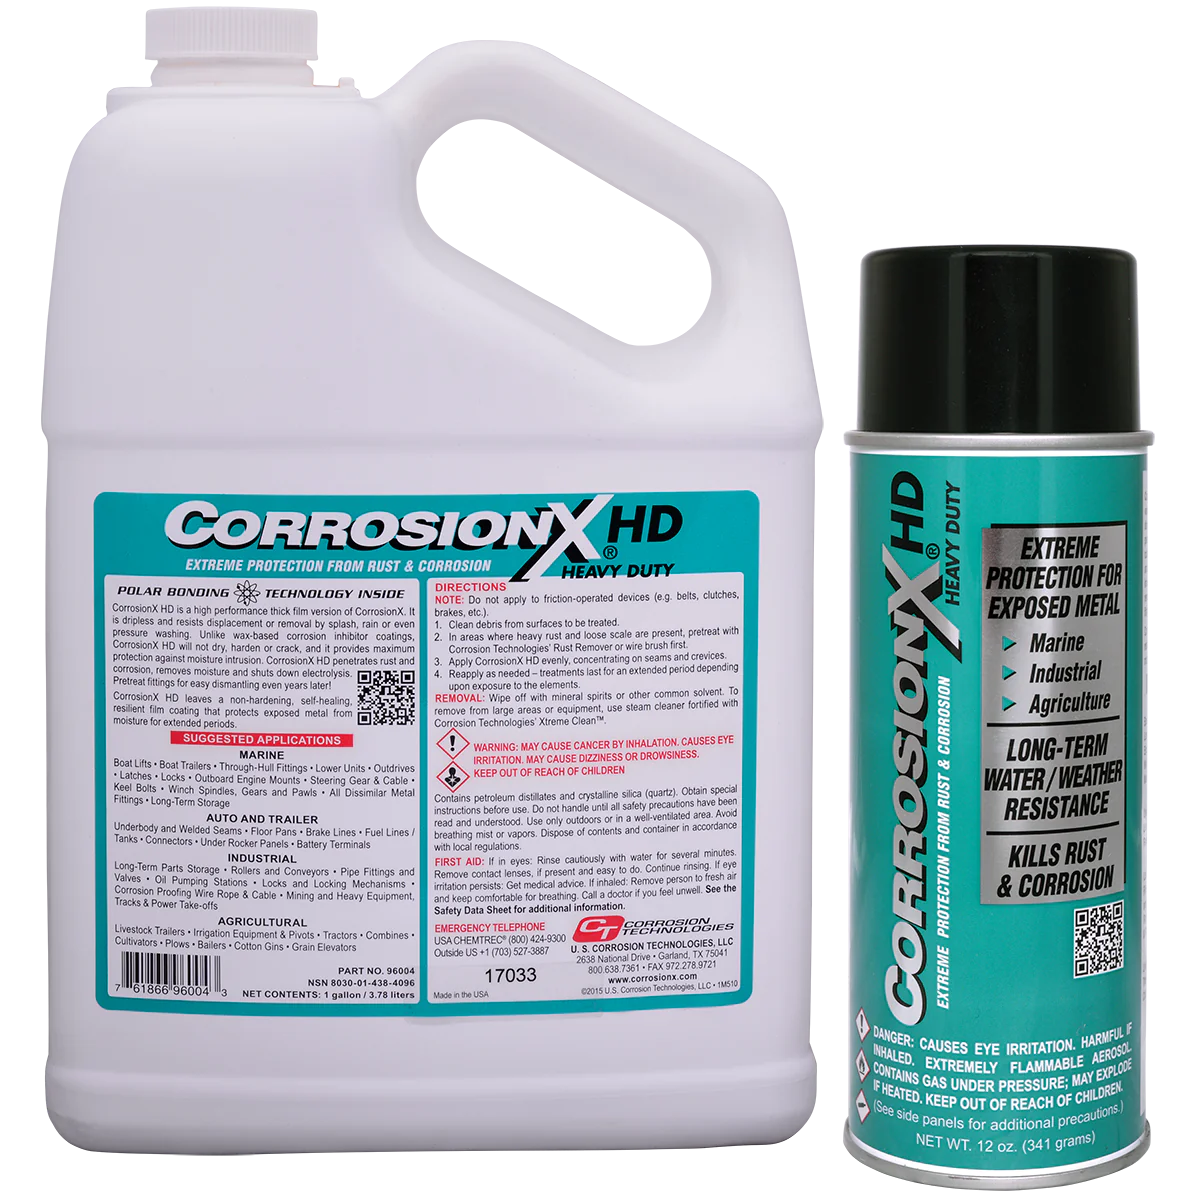 CorrosionX HD